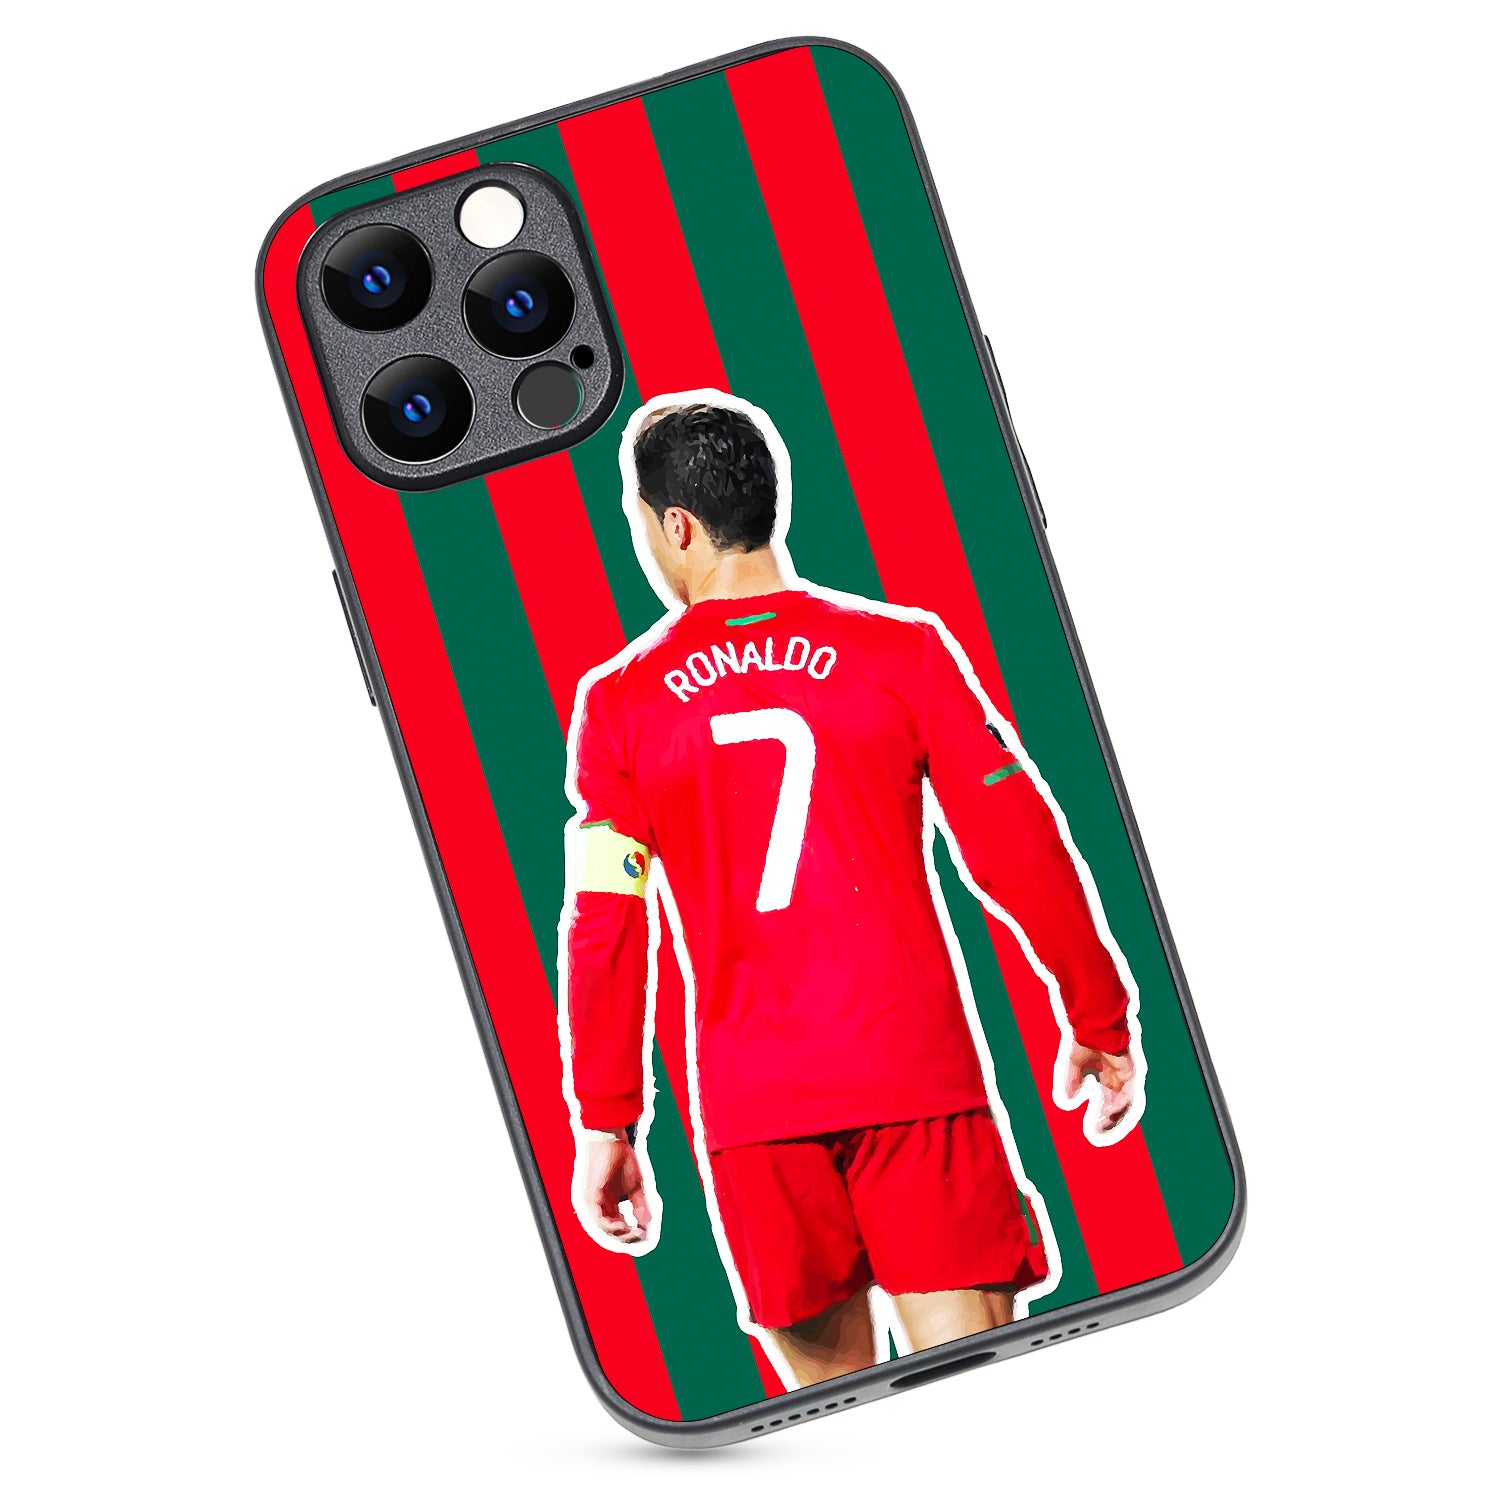 Ronaldo Sports Sports iPhone 12 Pro Max Case